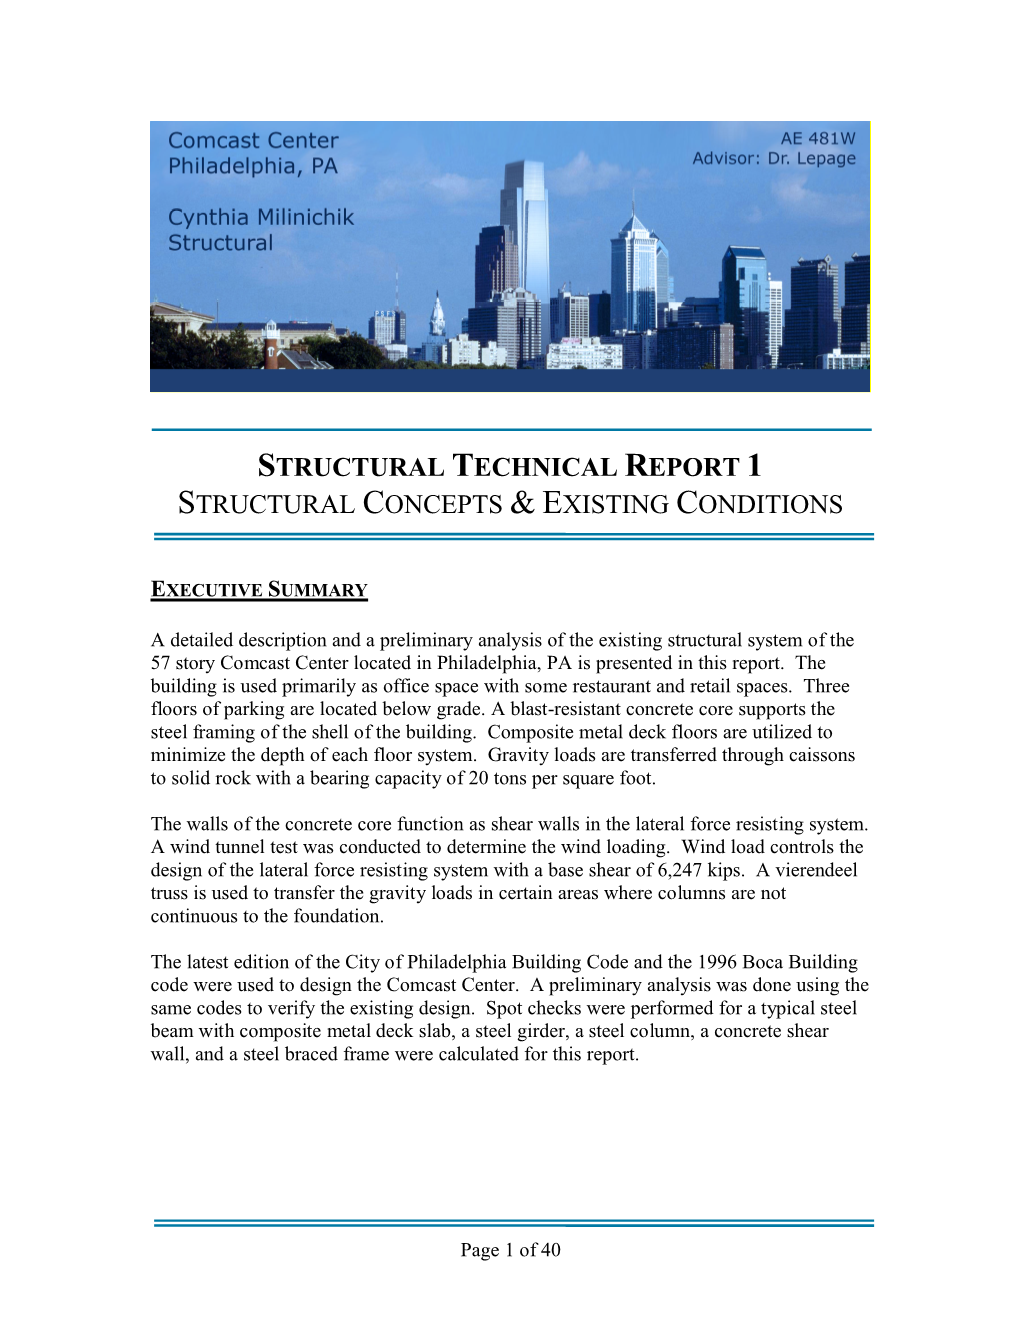 Tech Report 1